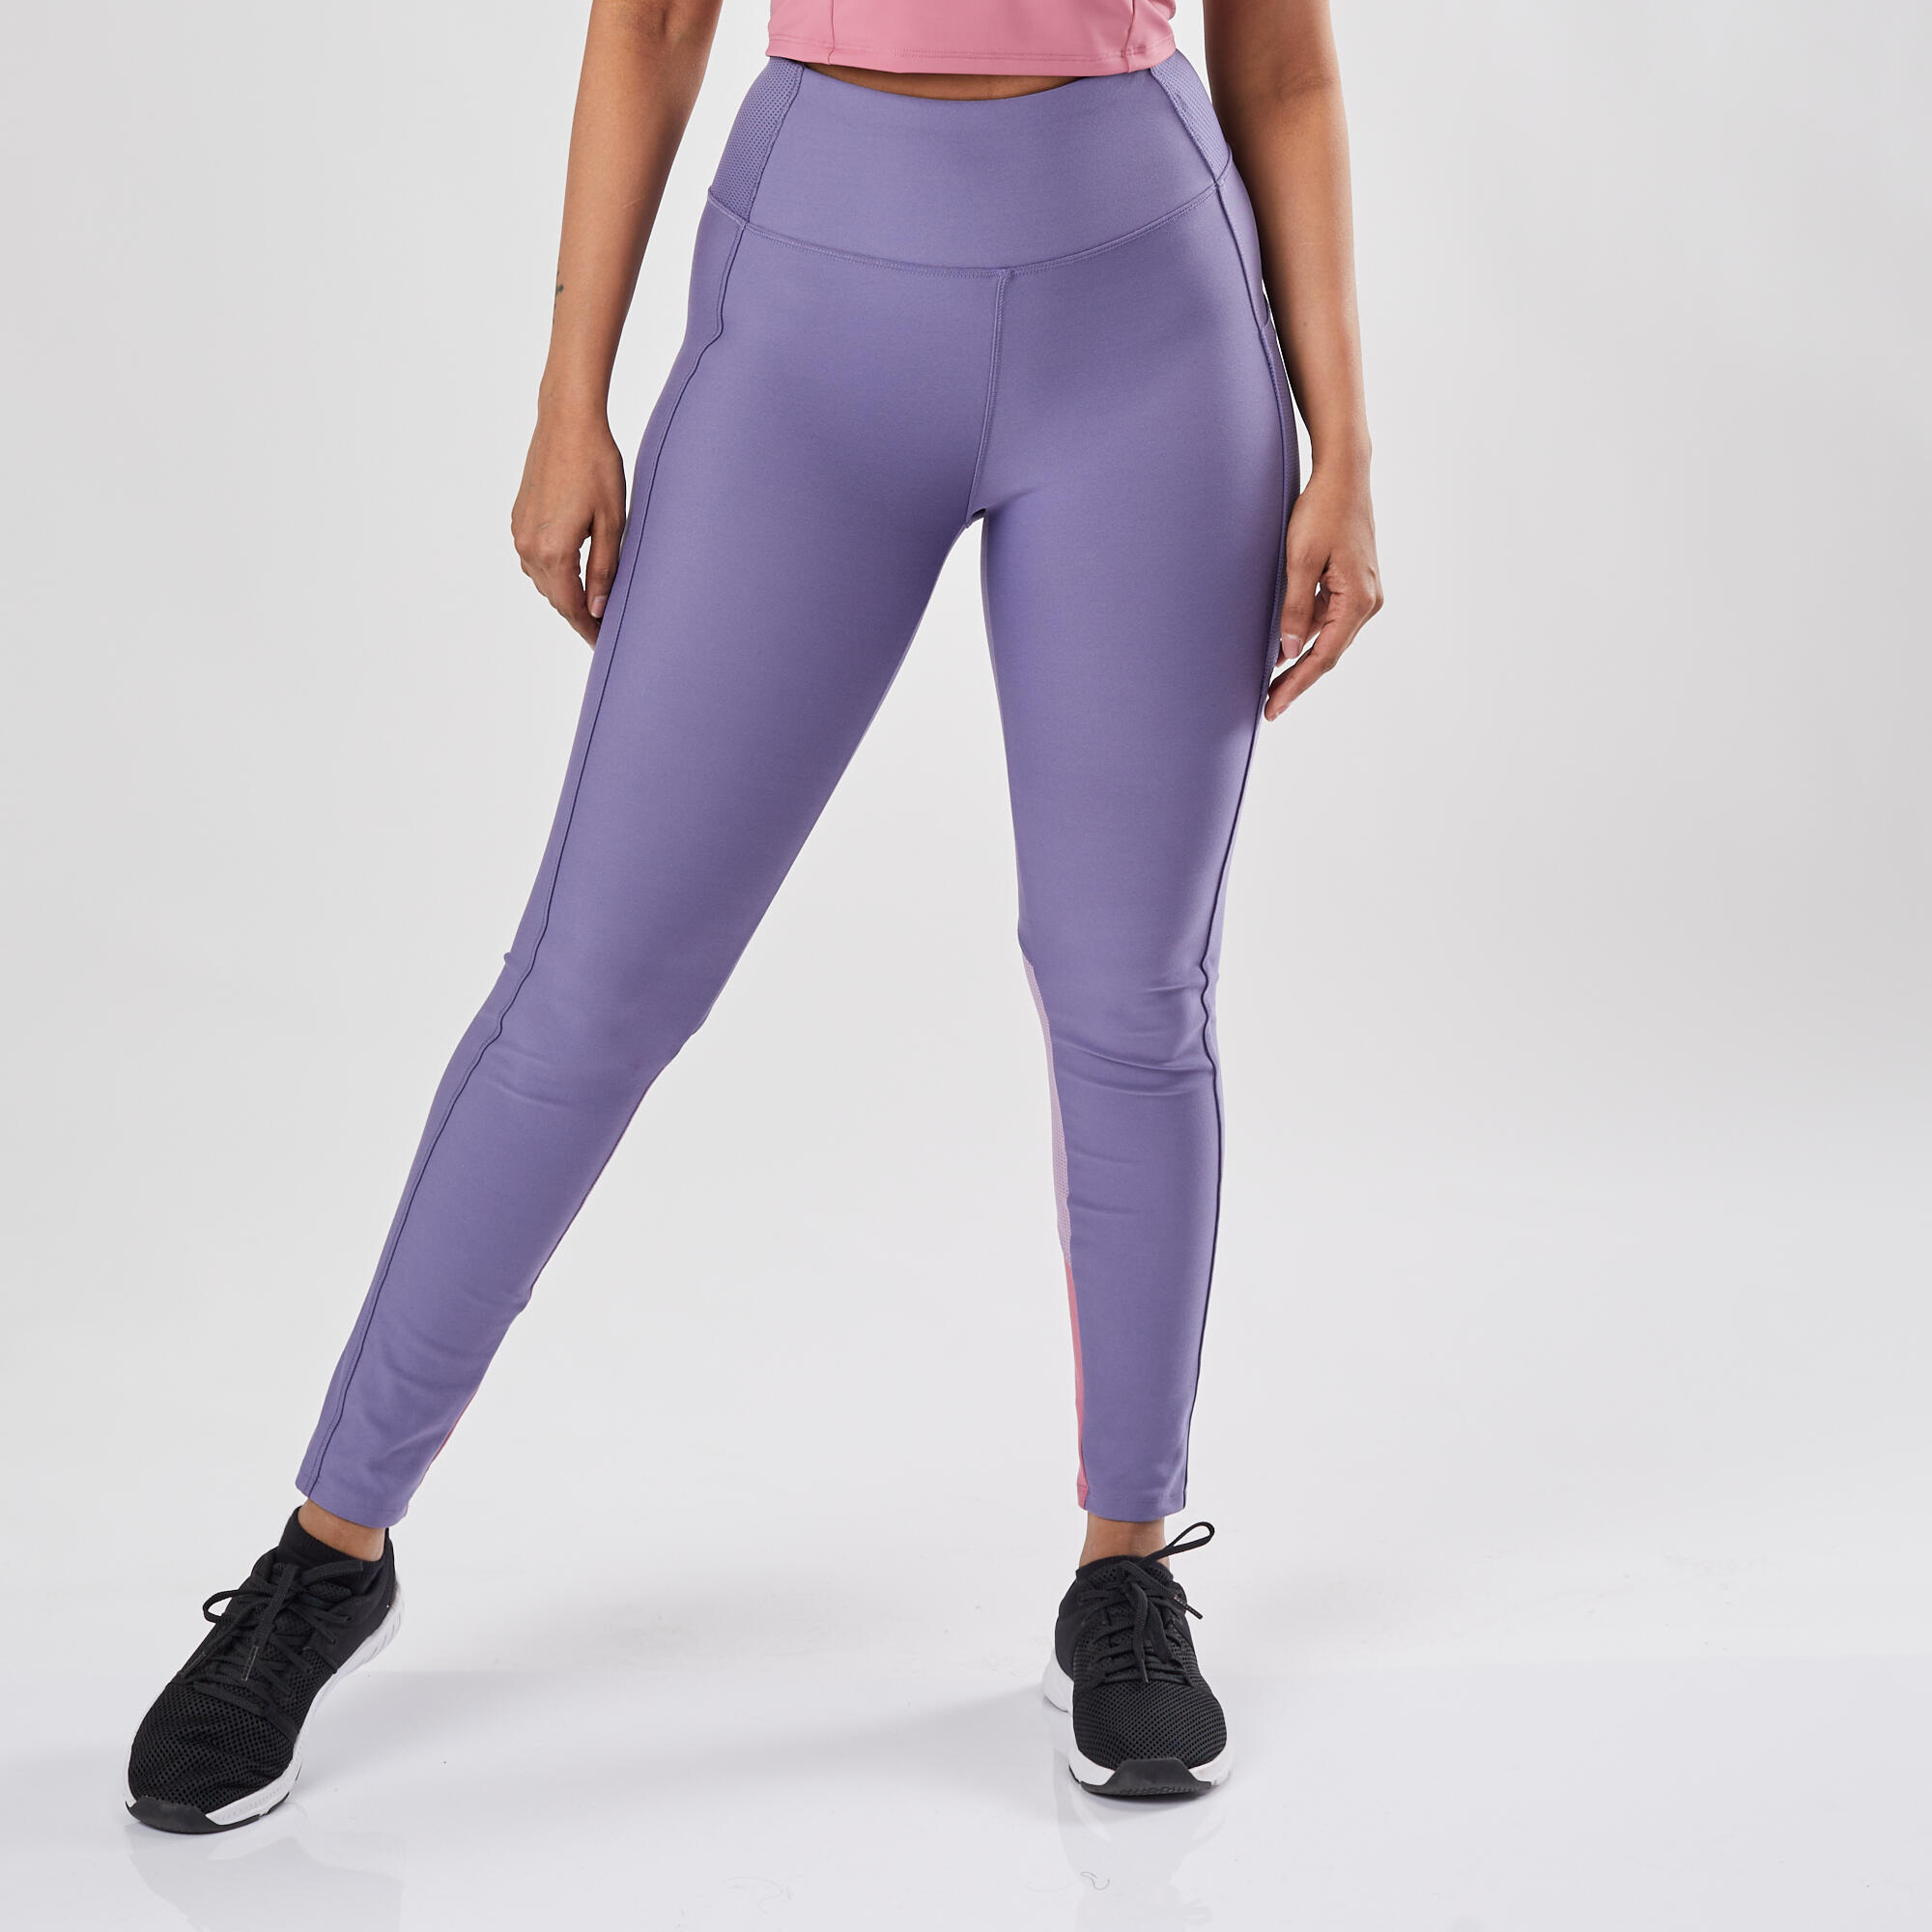 EHA Gym wear Side Pocket Leggings Workout Pants Stretchable  TightsHighwaist Sports Fitness Yoga Track Pants